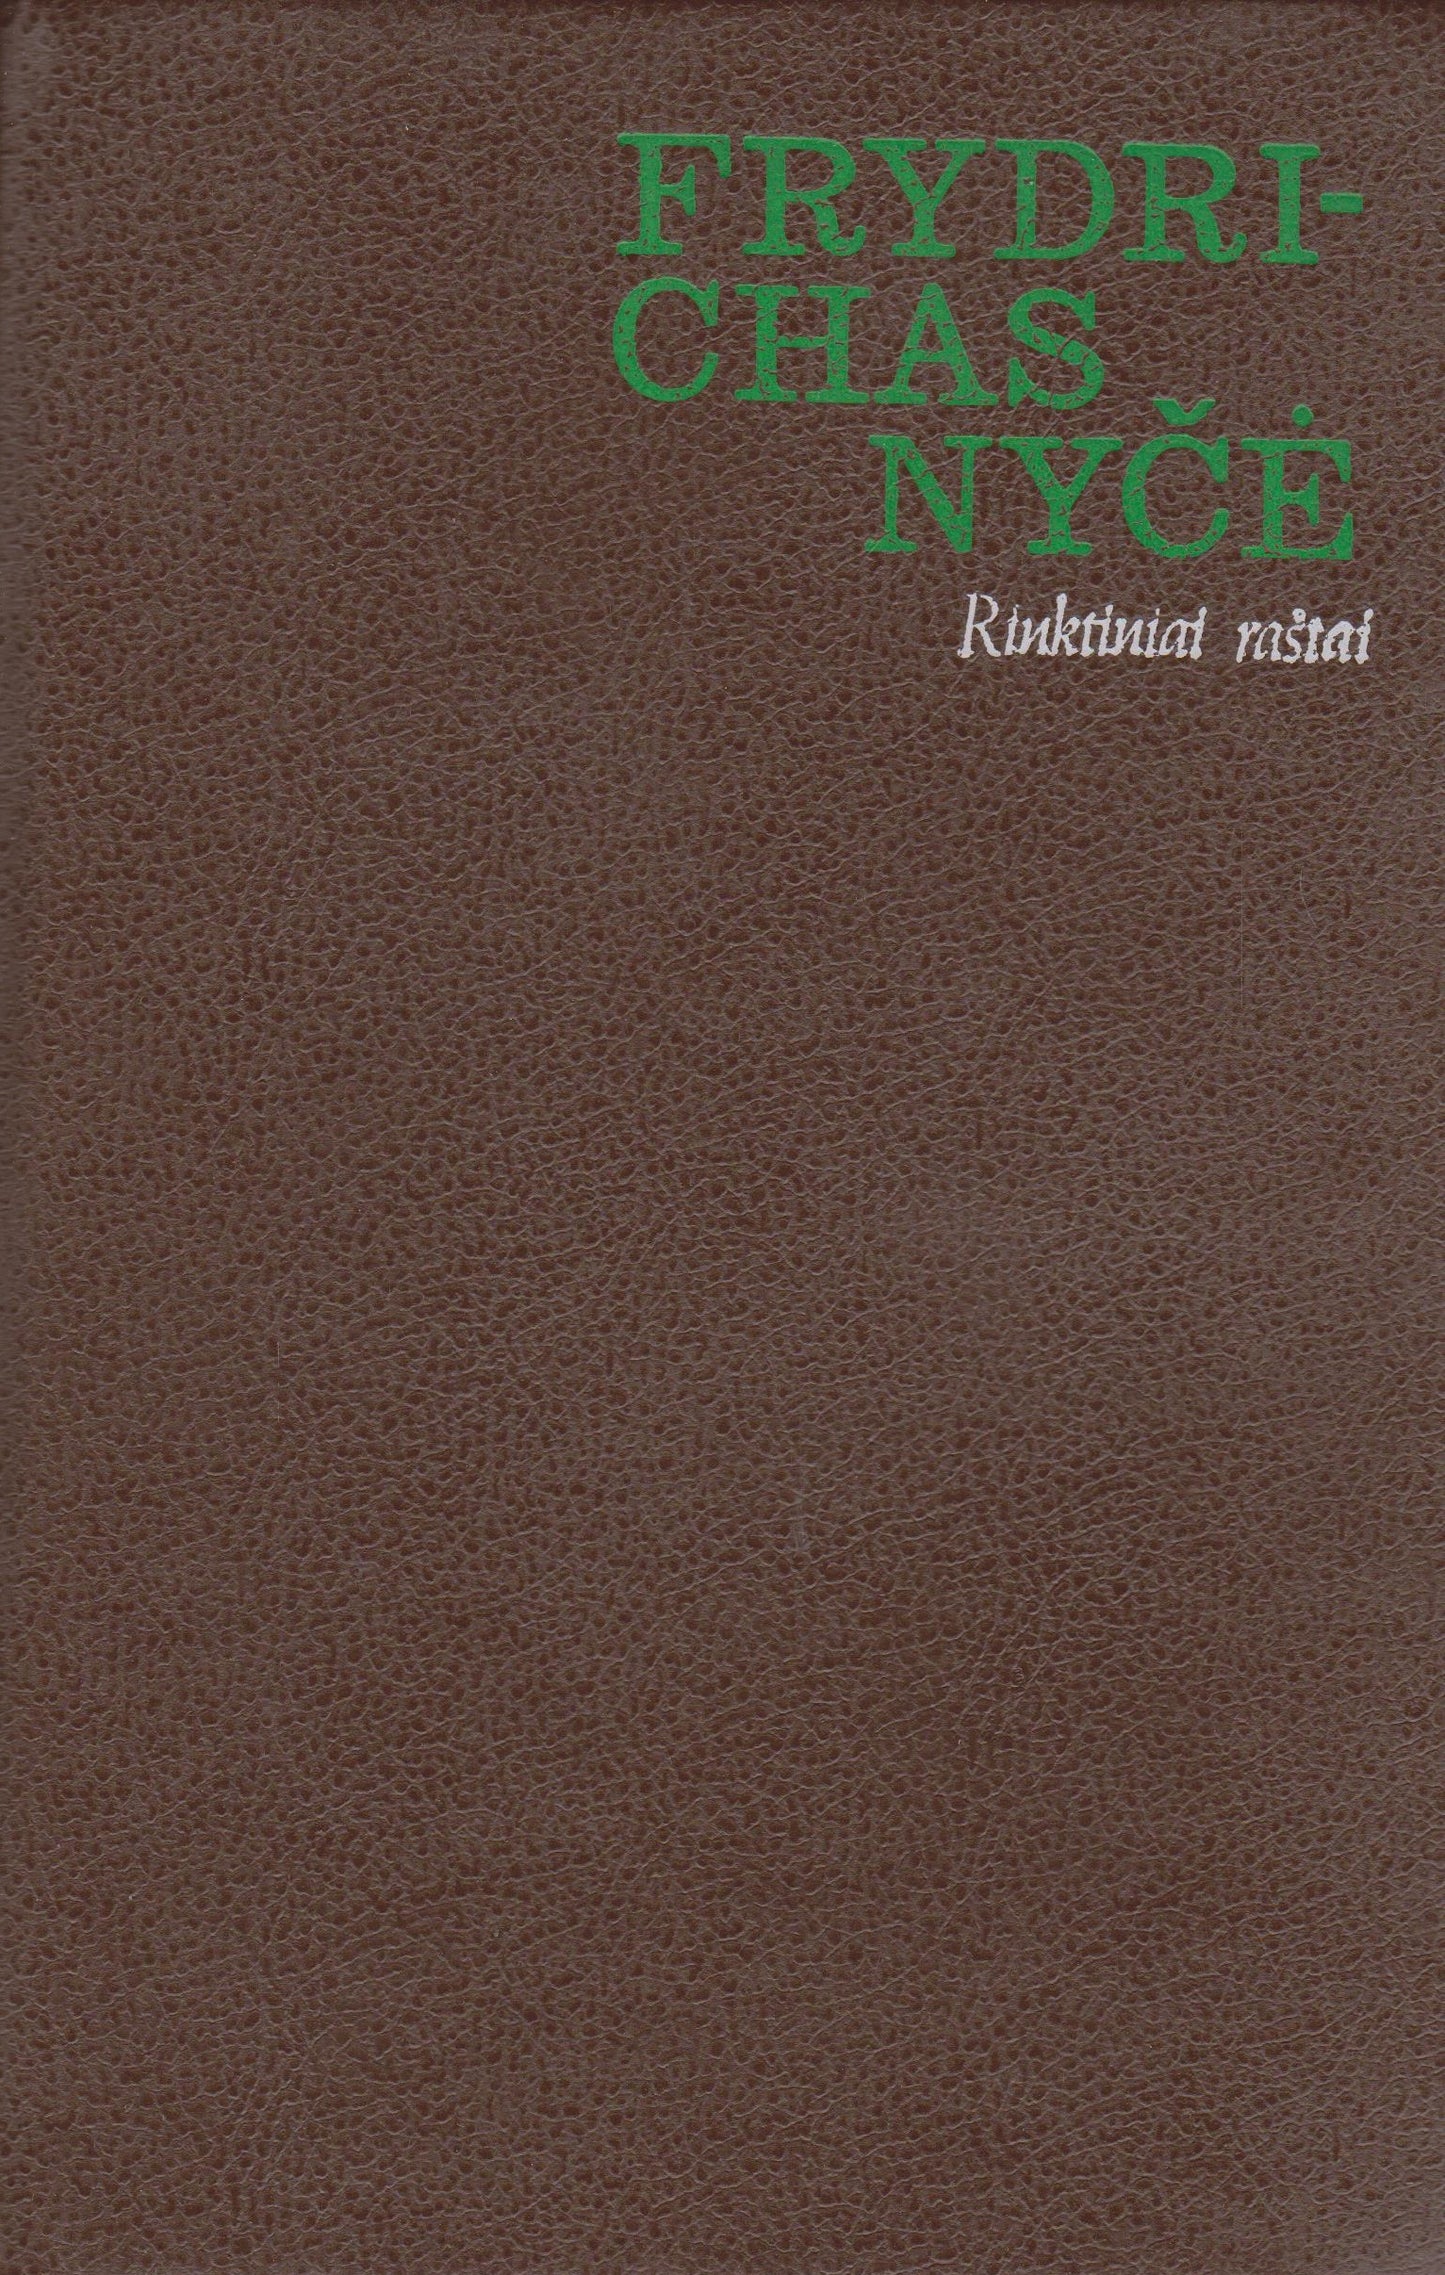 Frydrichas Nietzsche (Nyčė) -  Rinktiniai raštai